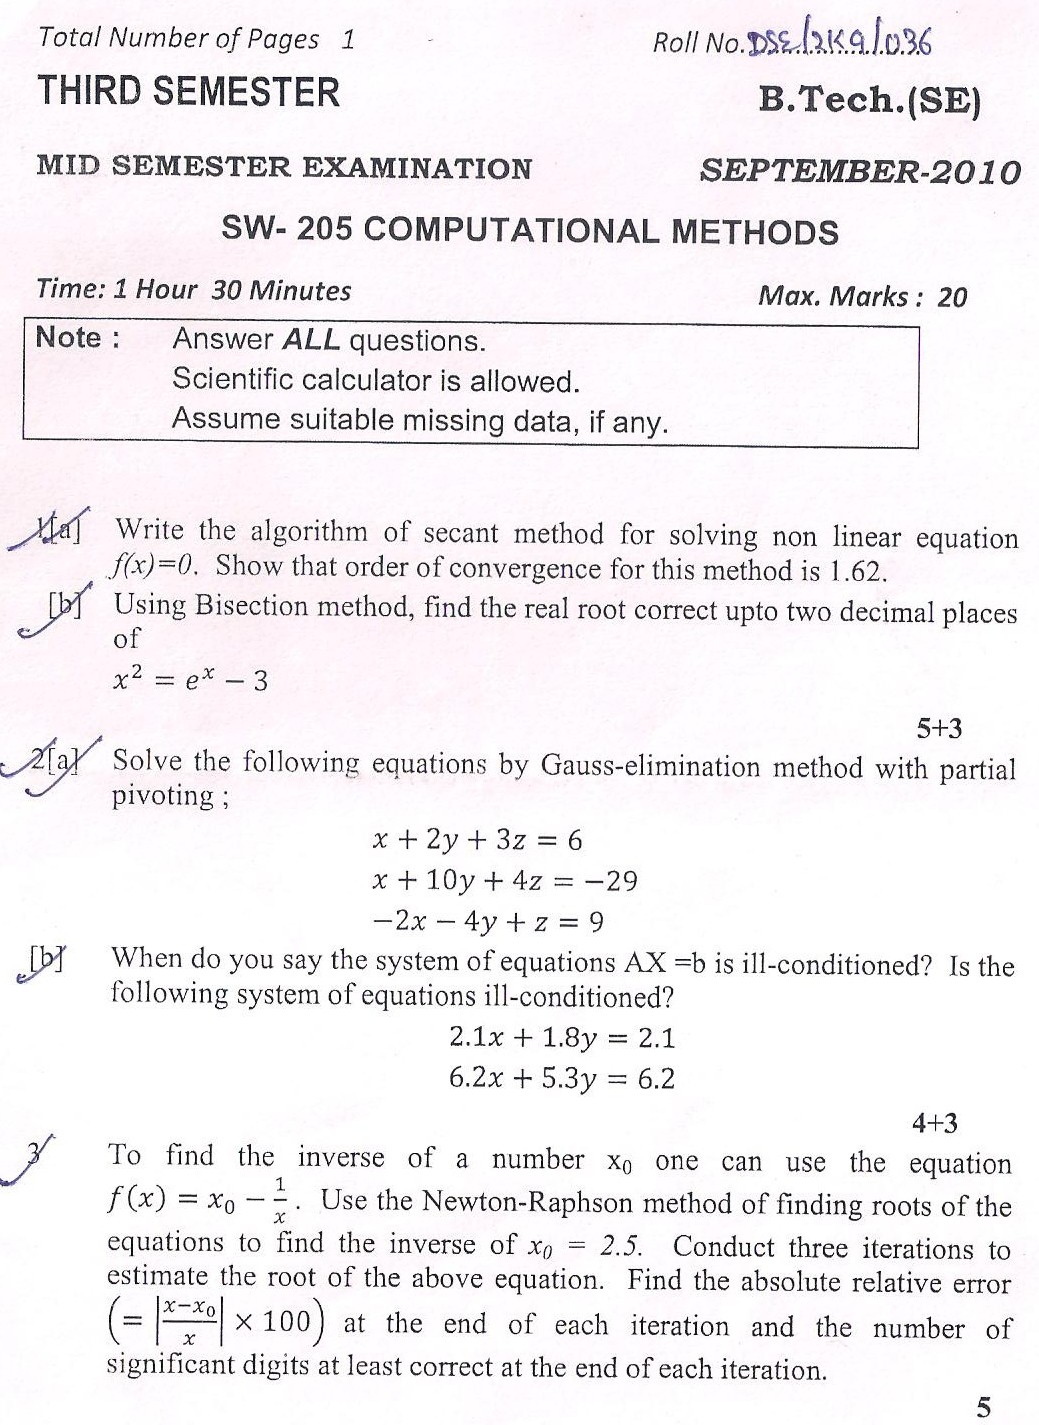 DTU Question Papers 2010  3 Semester - Mid Sem - SW-205